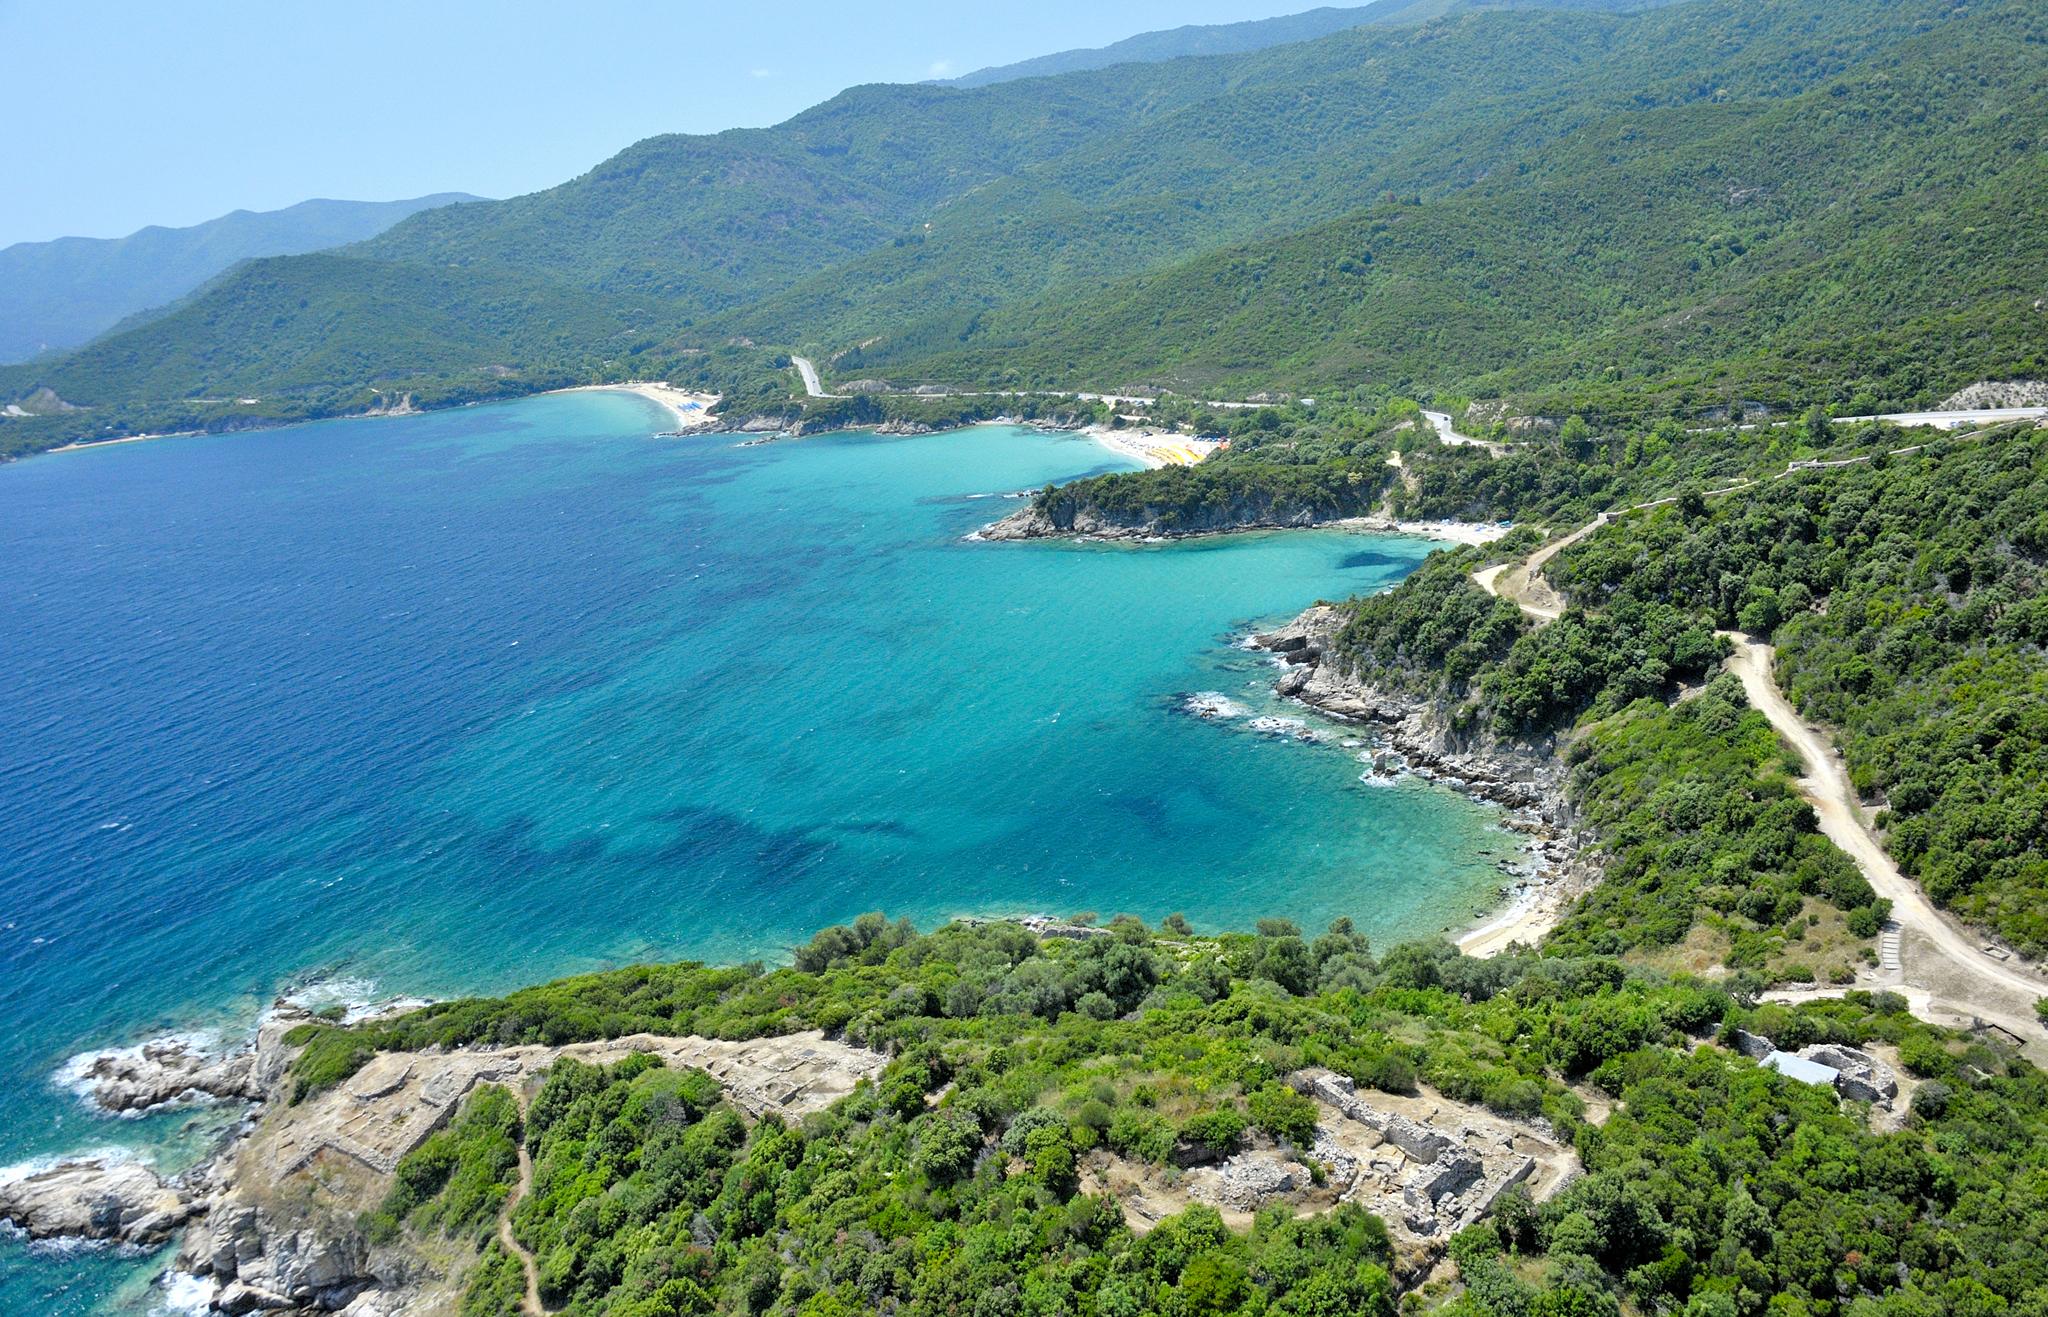 While away an afternoon walking the beautiful coastline of?Halkidiki